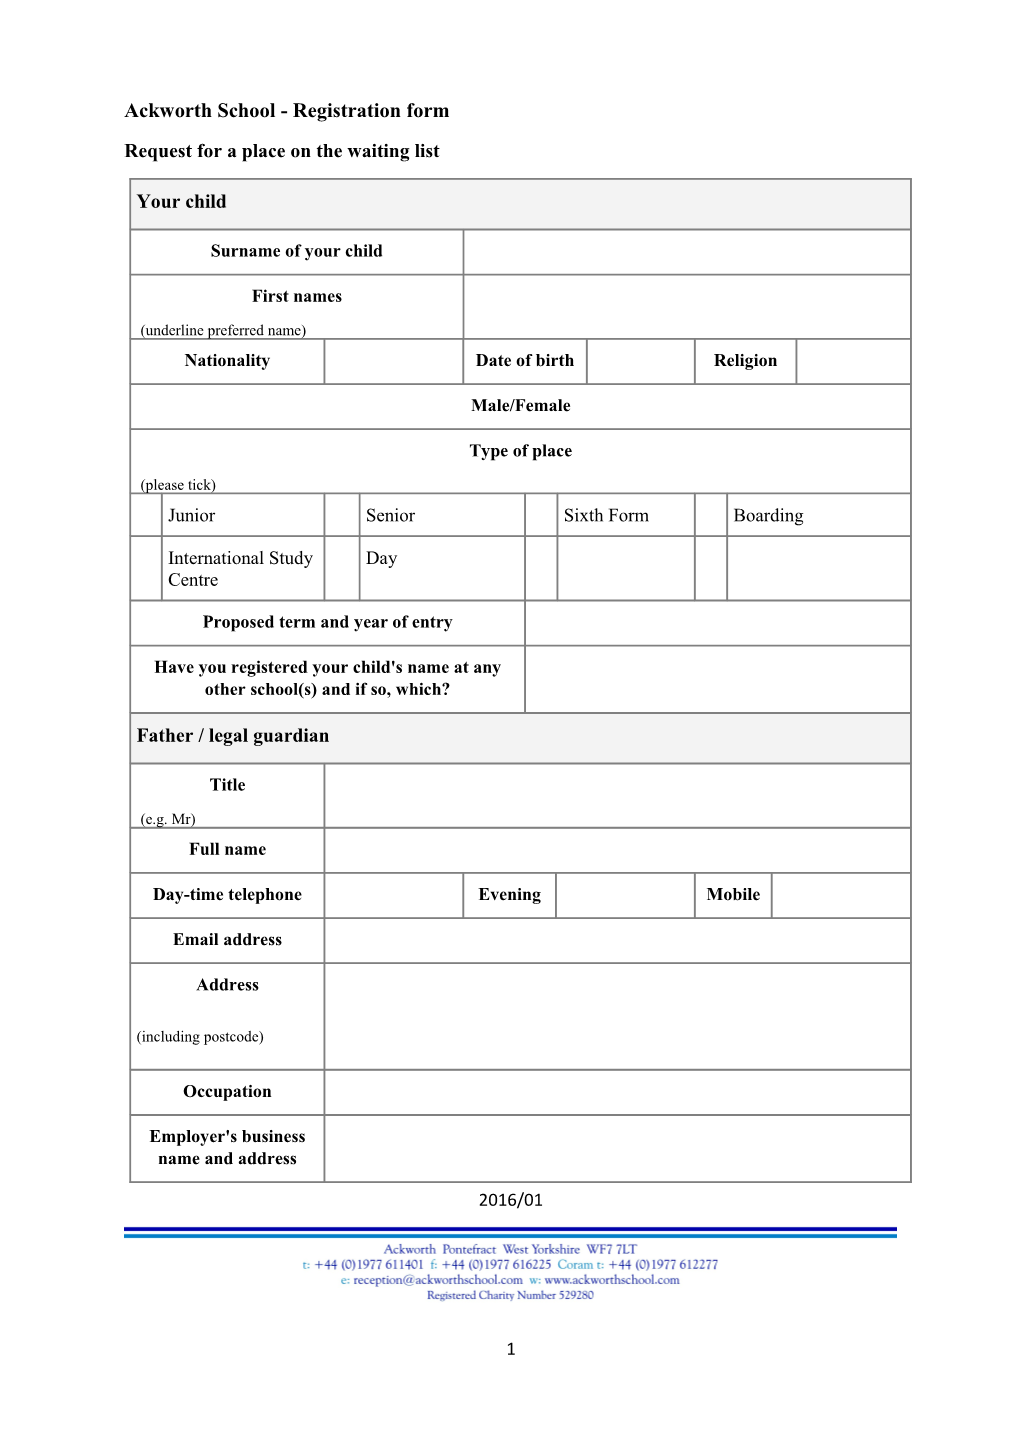 Ackworth School - Registration Form